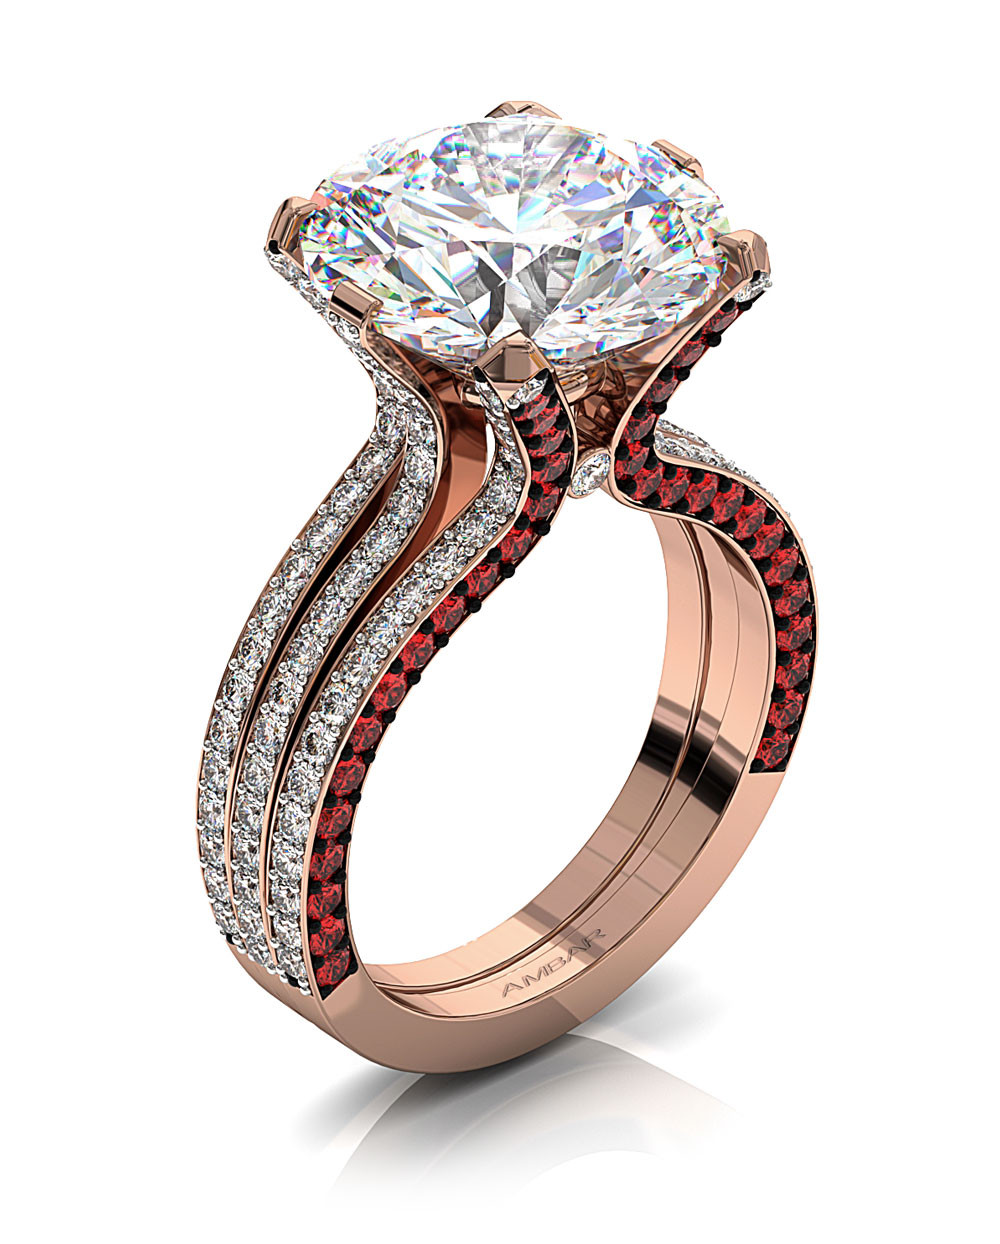 5 Carat Diamond Engagement Ring
 5 Carat Diamond Engagement Rings by Bez Ambar